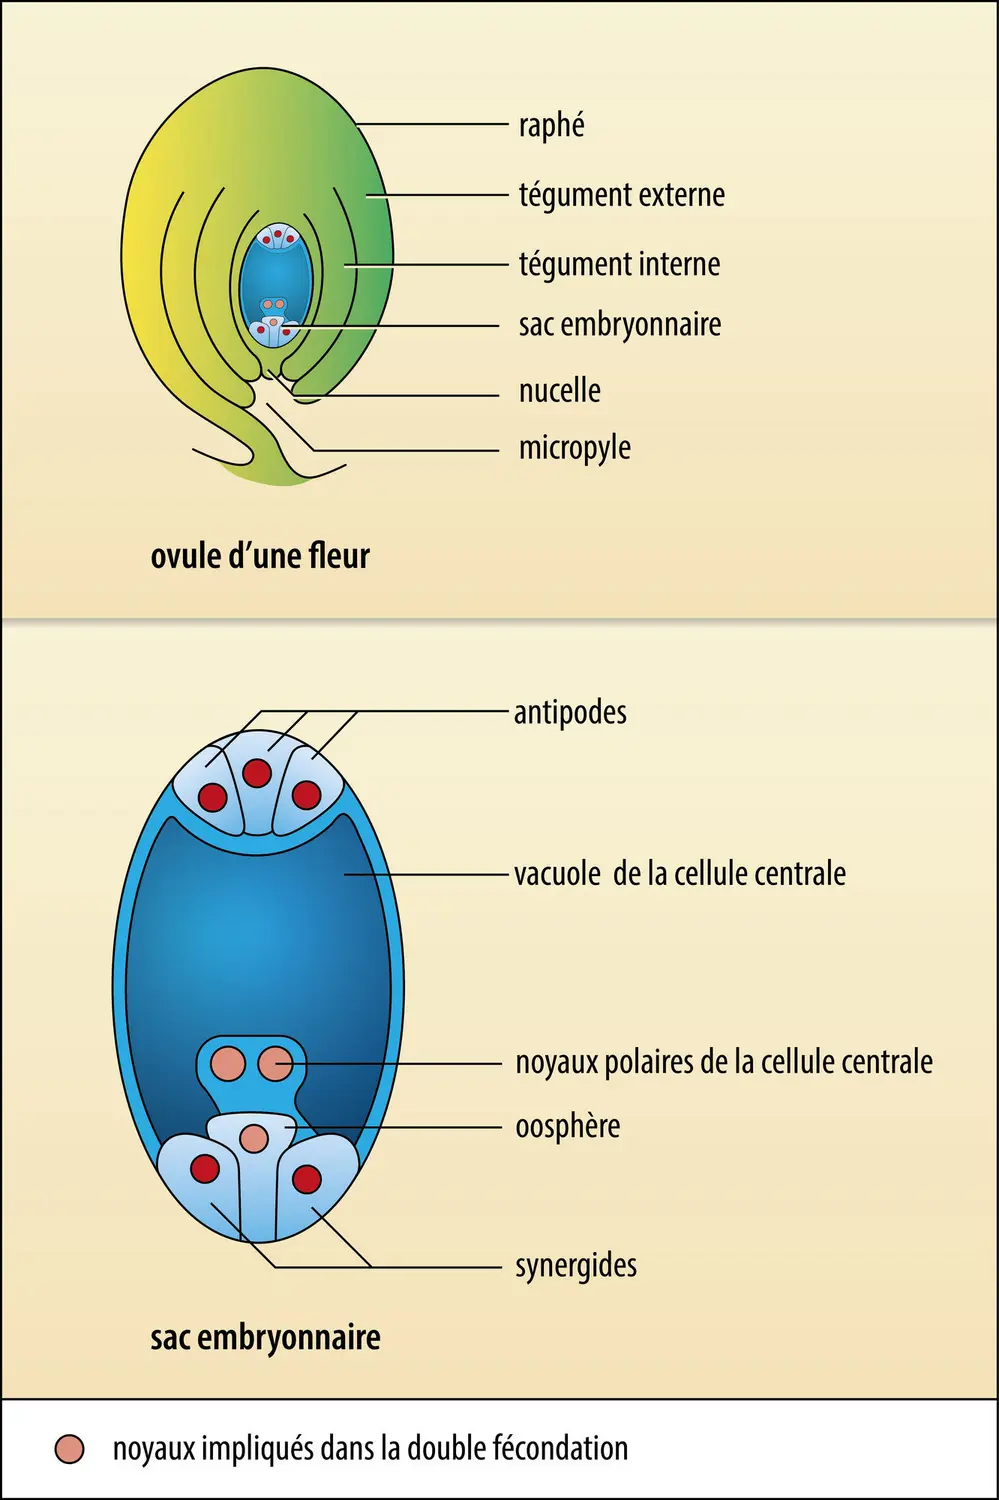 Angiospermes : ovule et sac embryonnaire